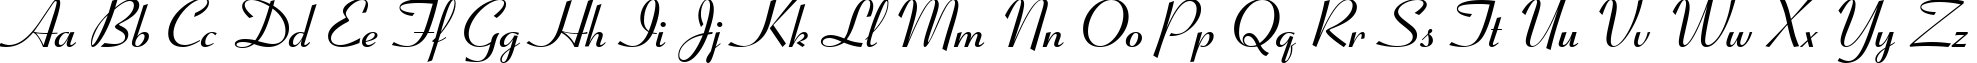 Пример написания английского алфавита шрифтом Ribbon 131 Bold BT